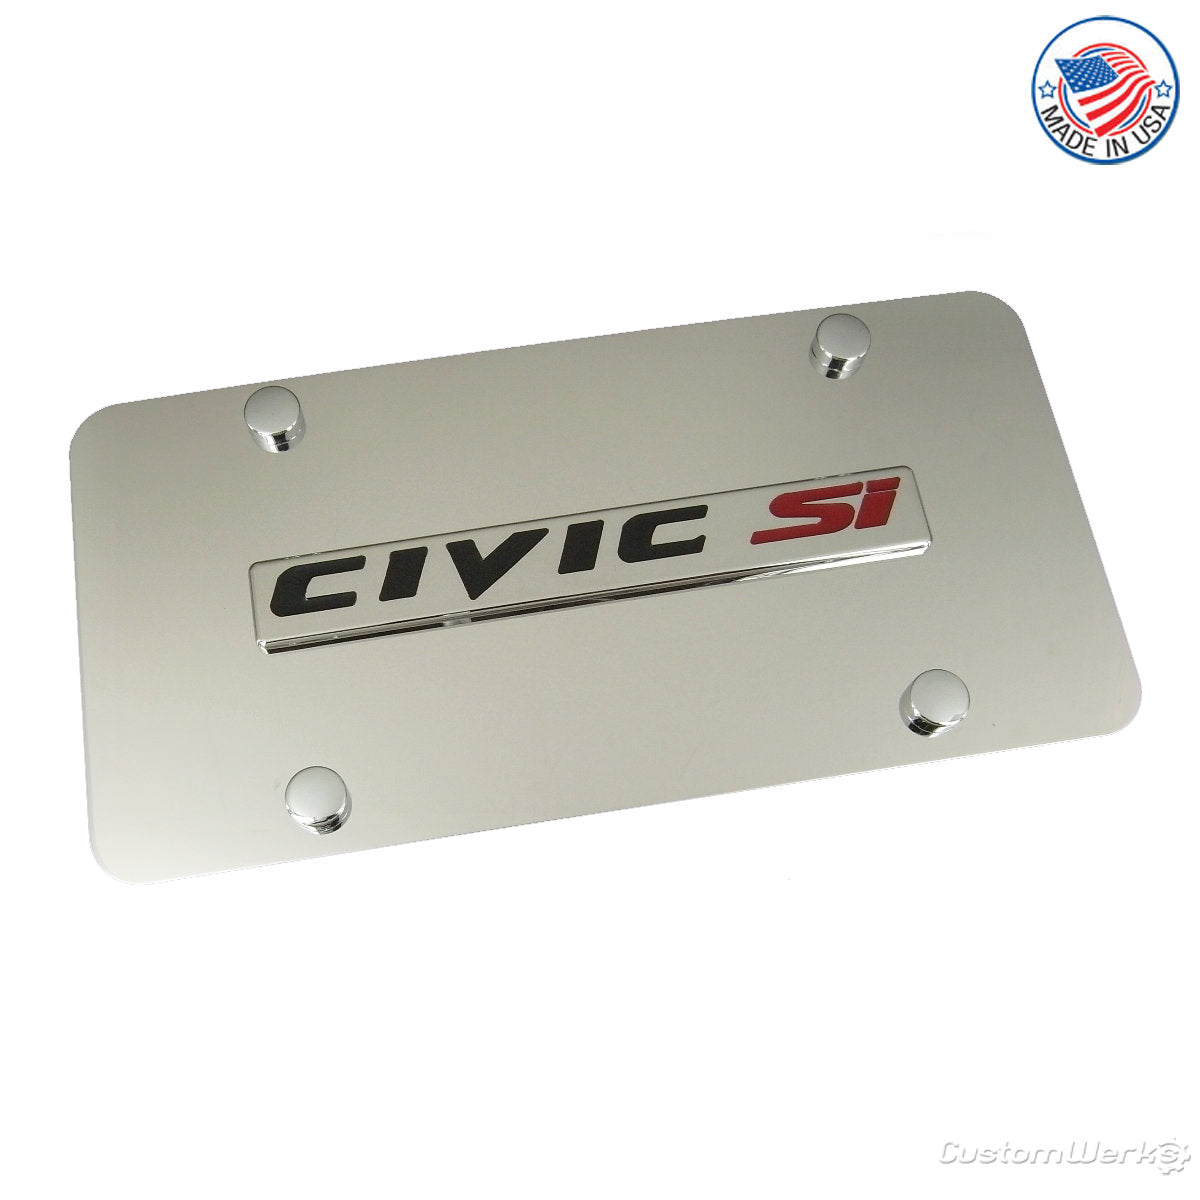 Honda Civic Si License Plate (Chrome) - Custom Werks